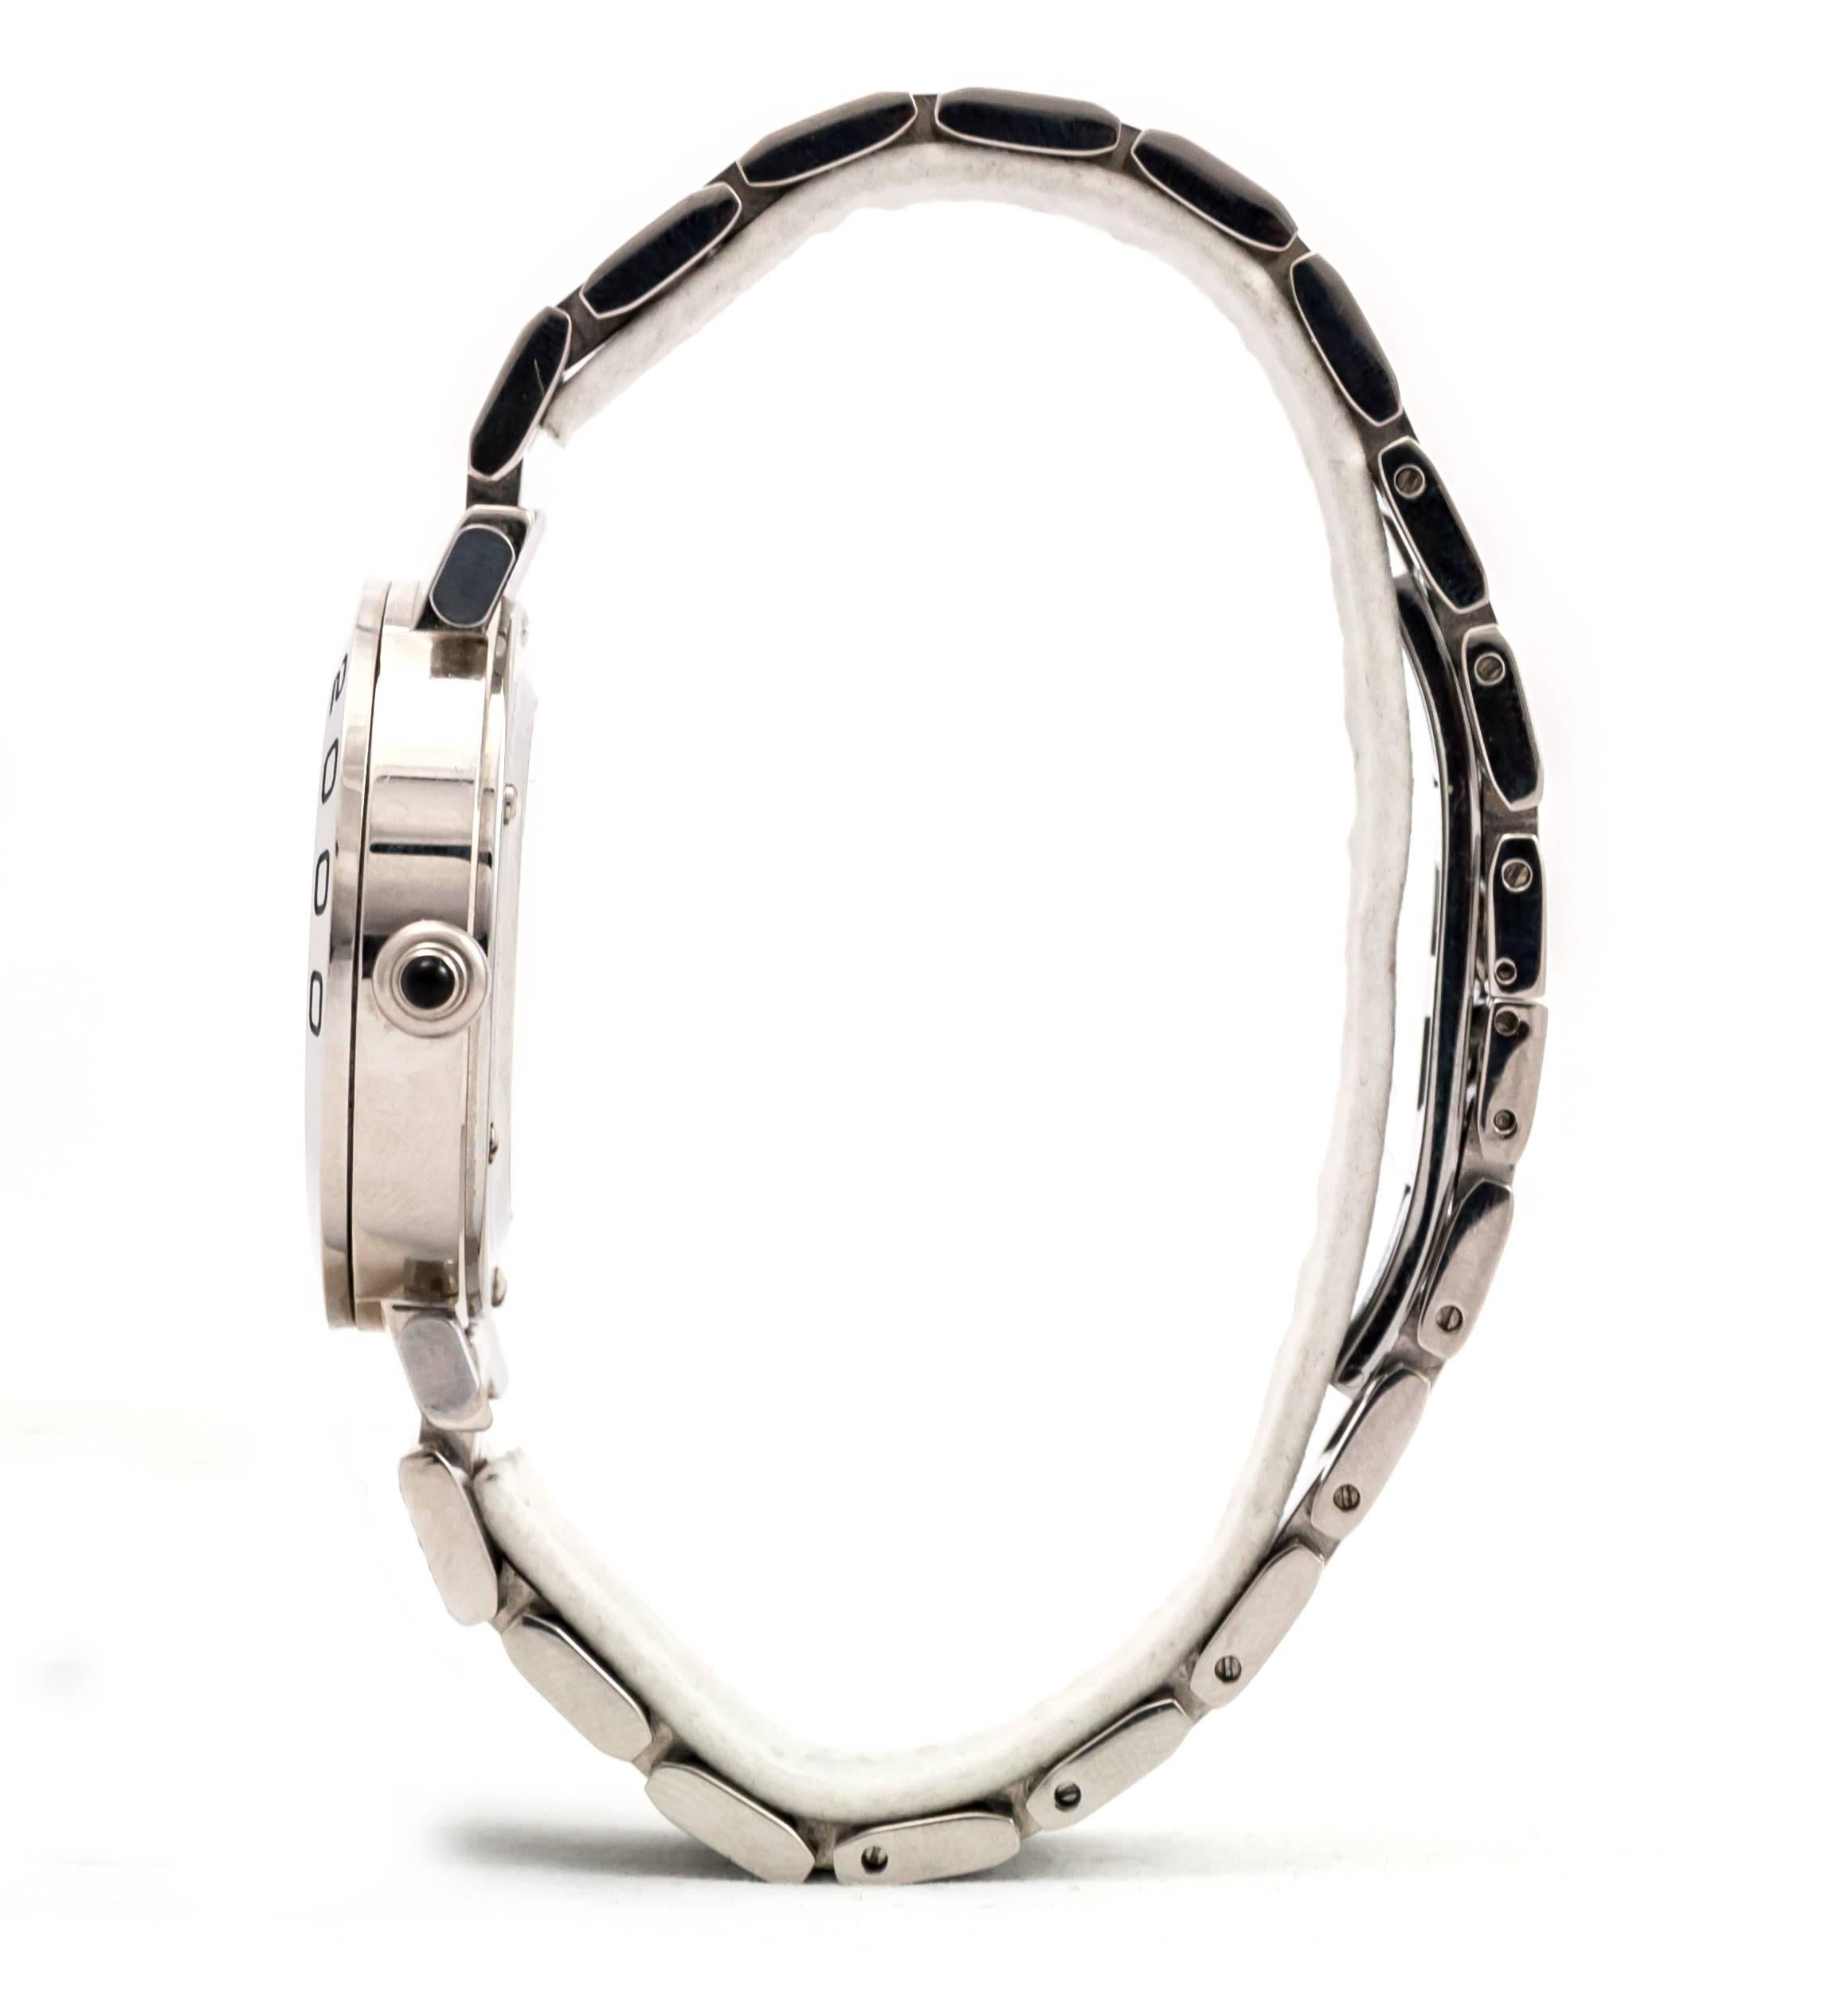 EDOUARD
Watch Millenium 2000.
Steel, steel bracelet.
GMT.
Power reserve.
Sapphire crystal case.
Automatic movement.
Breguet needles.
Box.
Warranty 1 year.